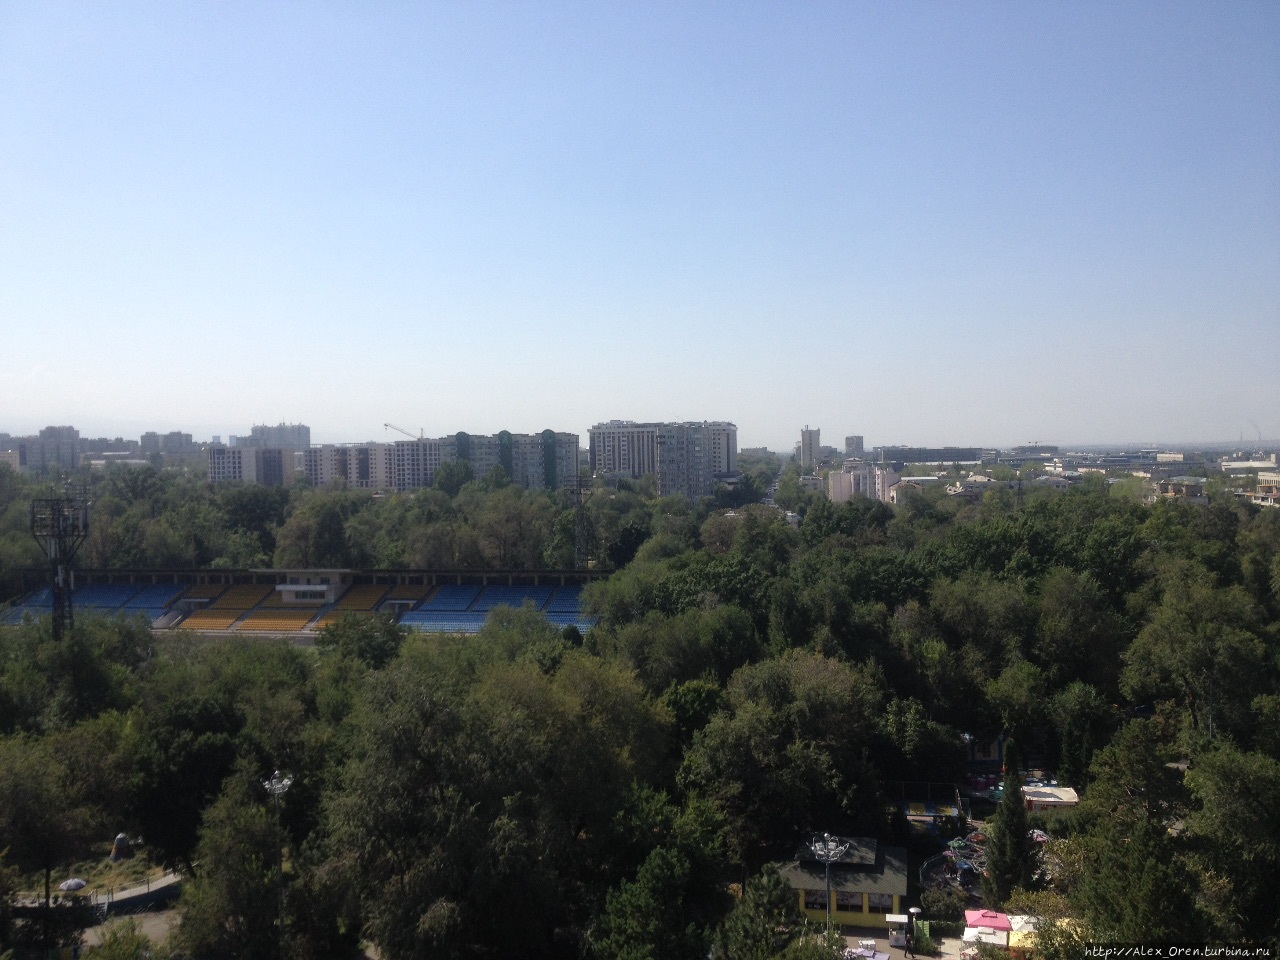 Центральный парк отдыха Алматы, Казахстан